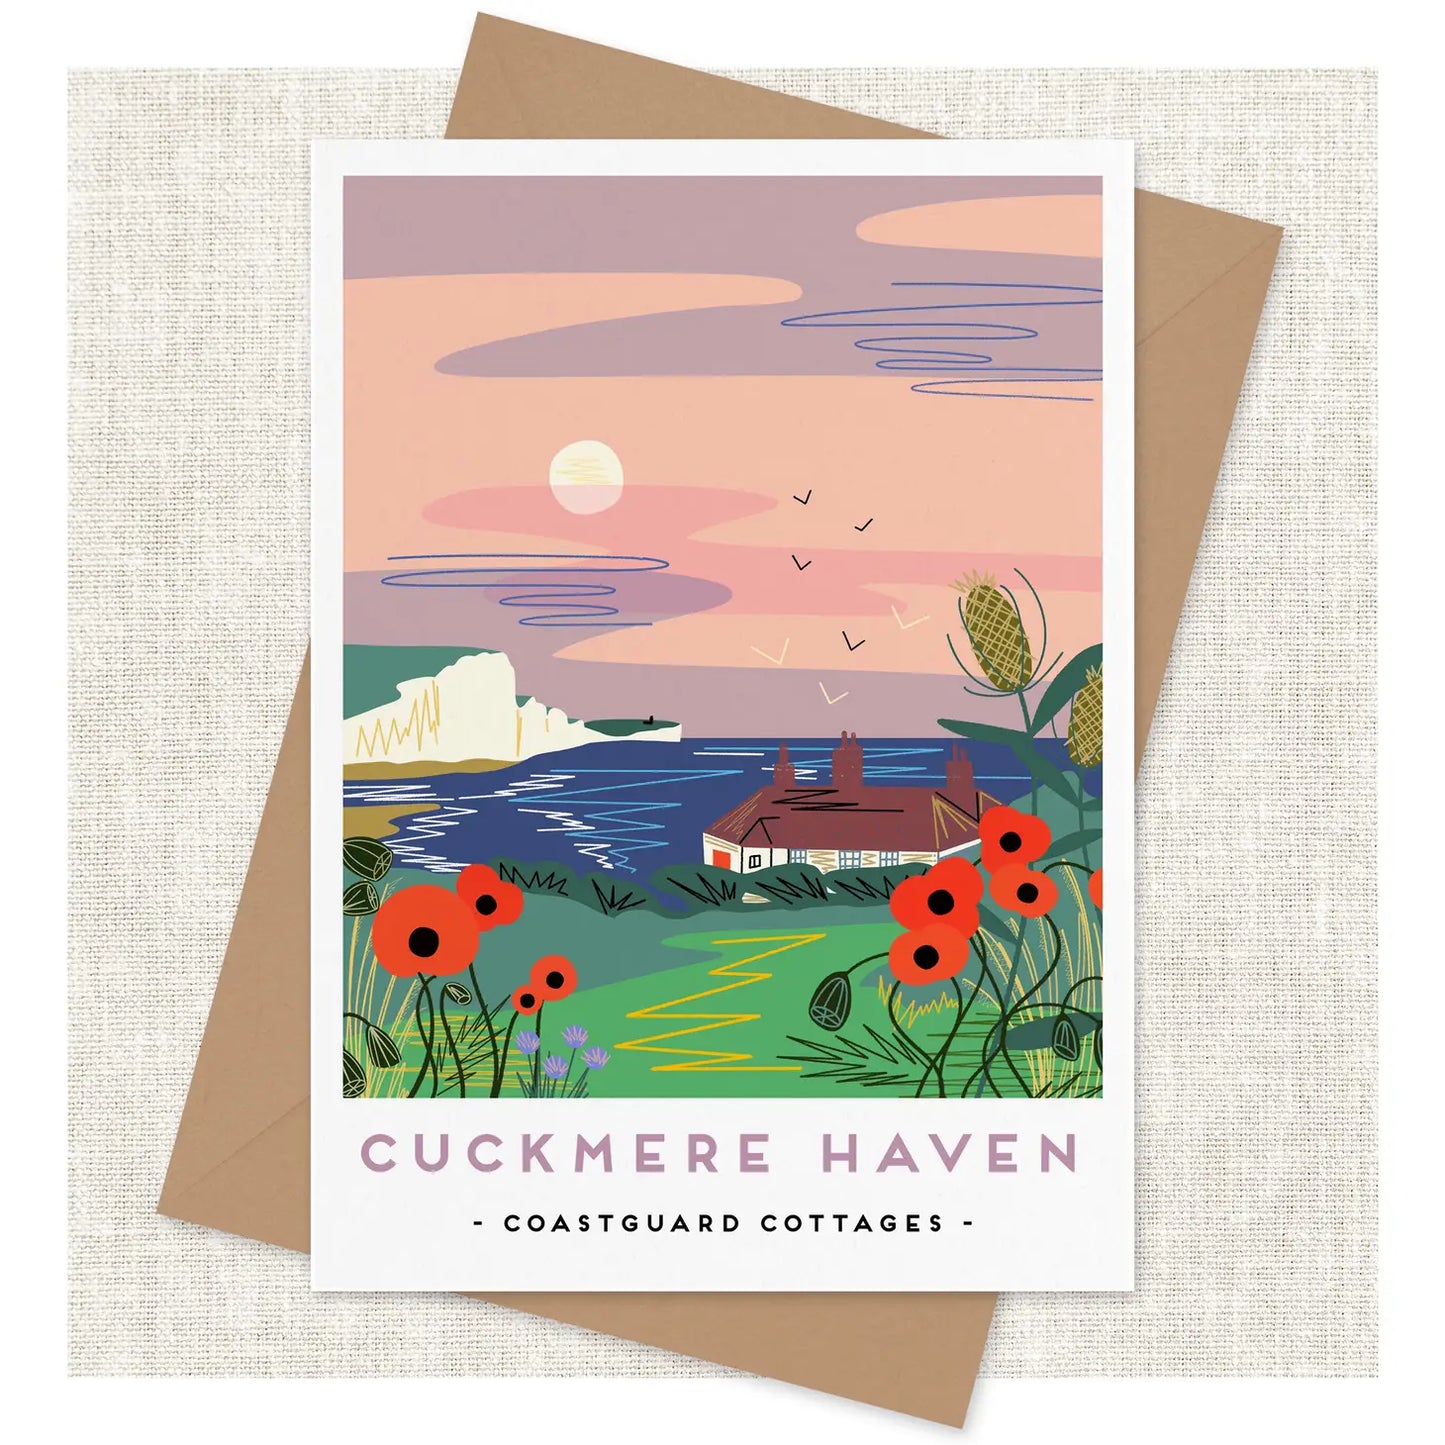 Cuckmere haven greetings card